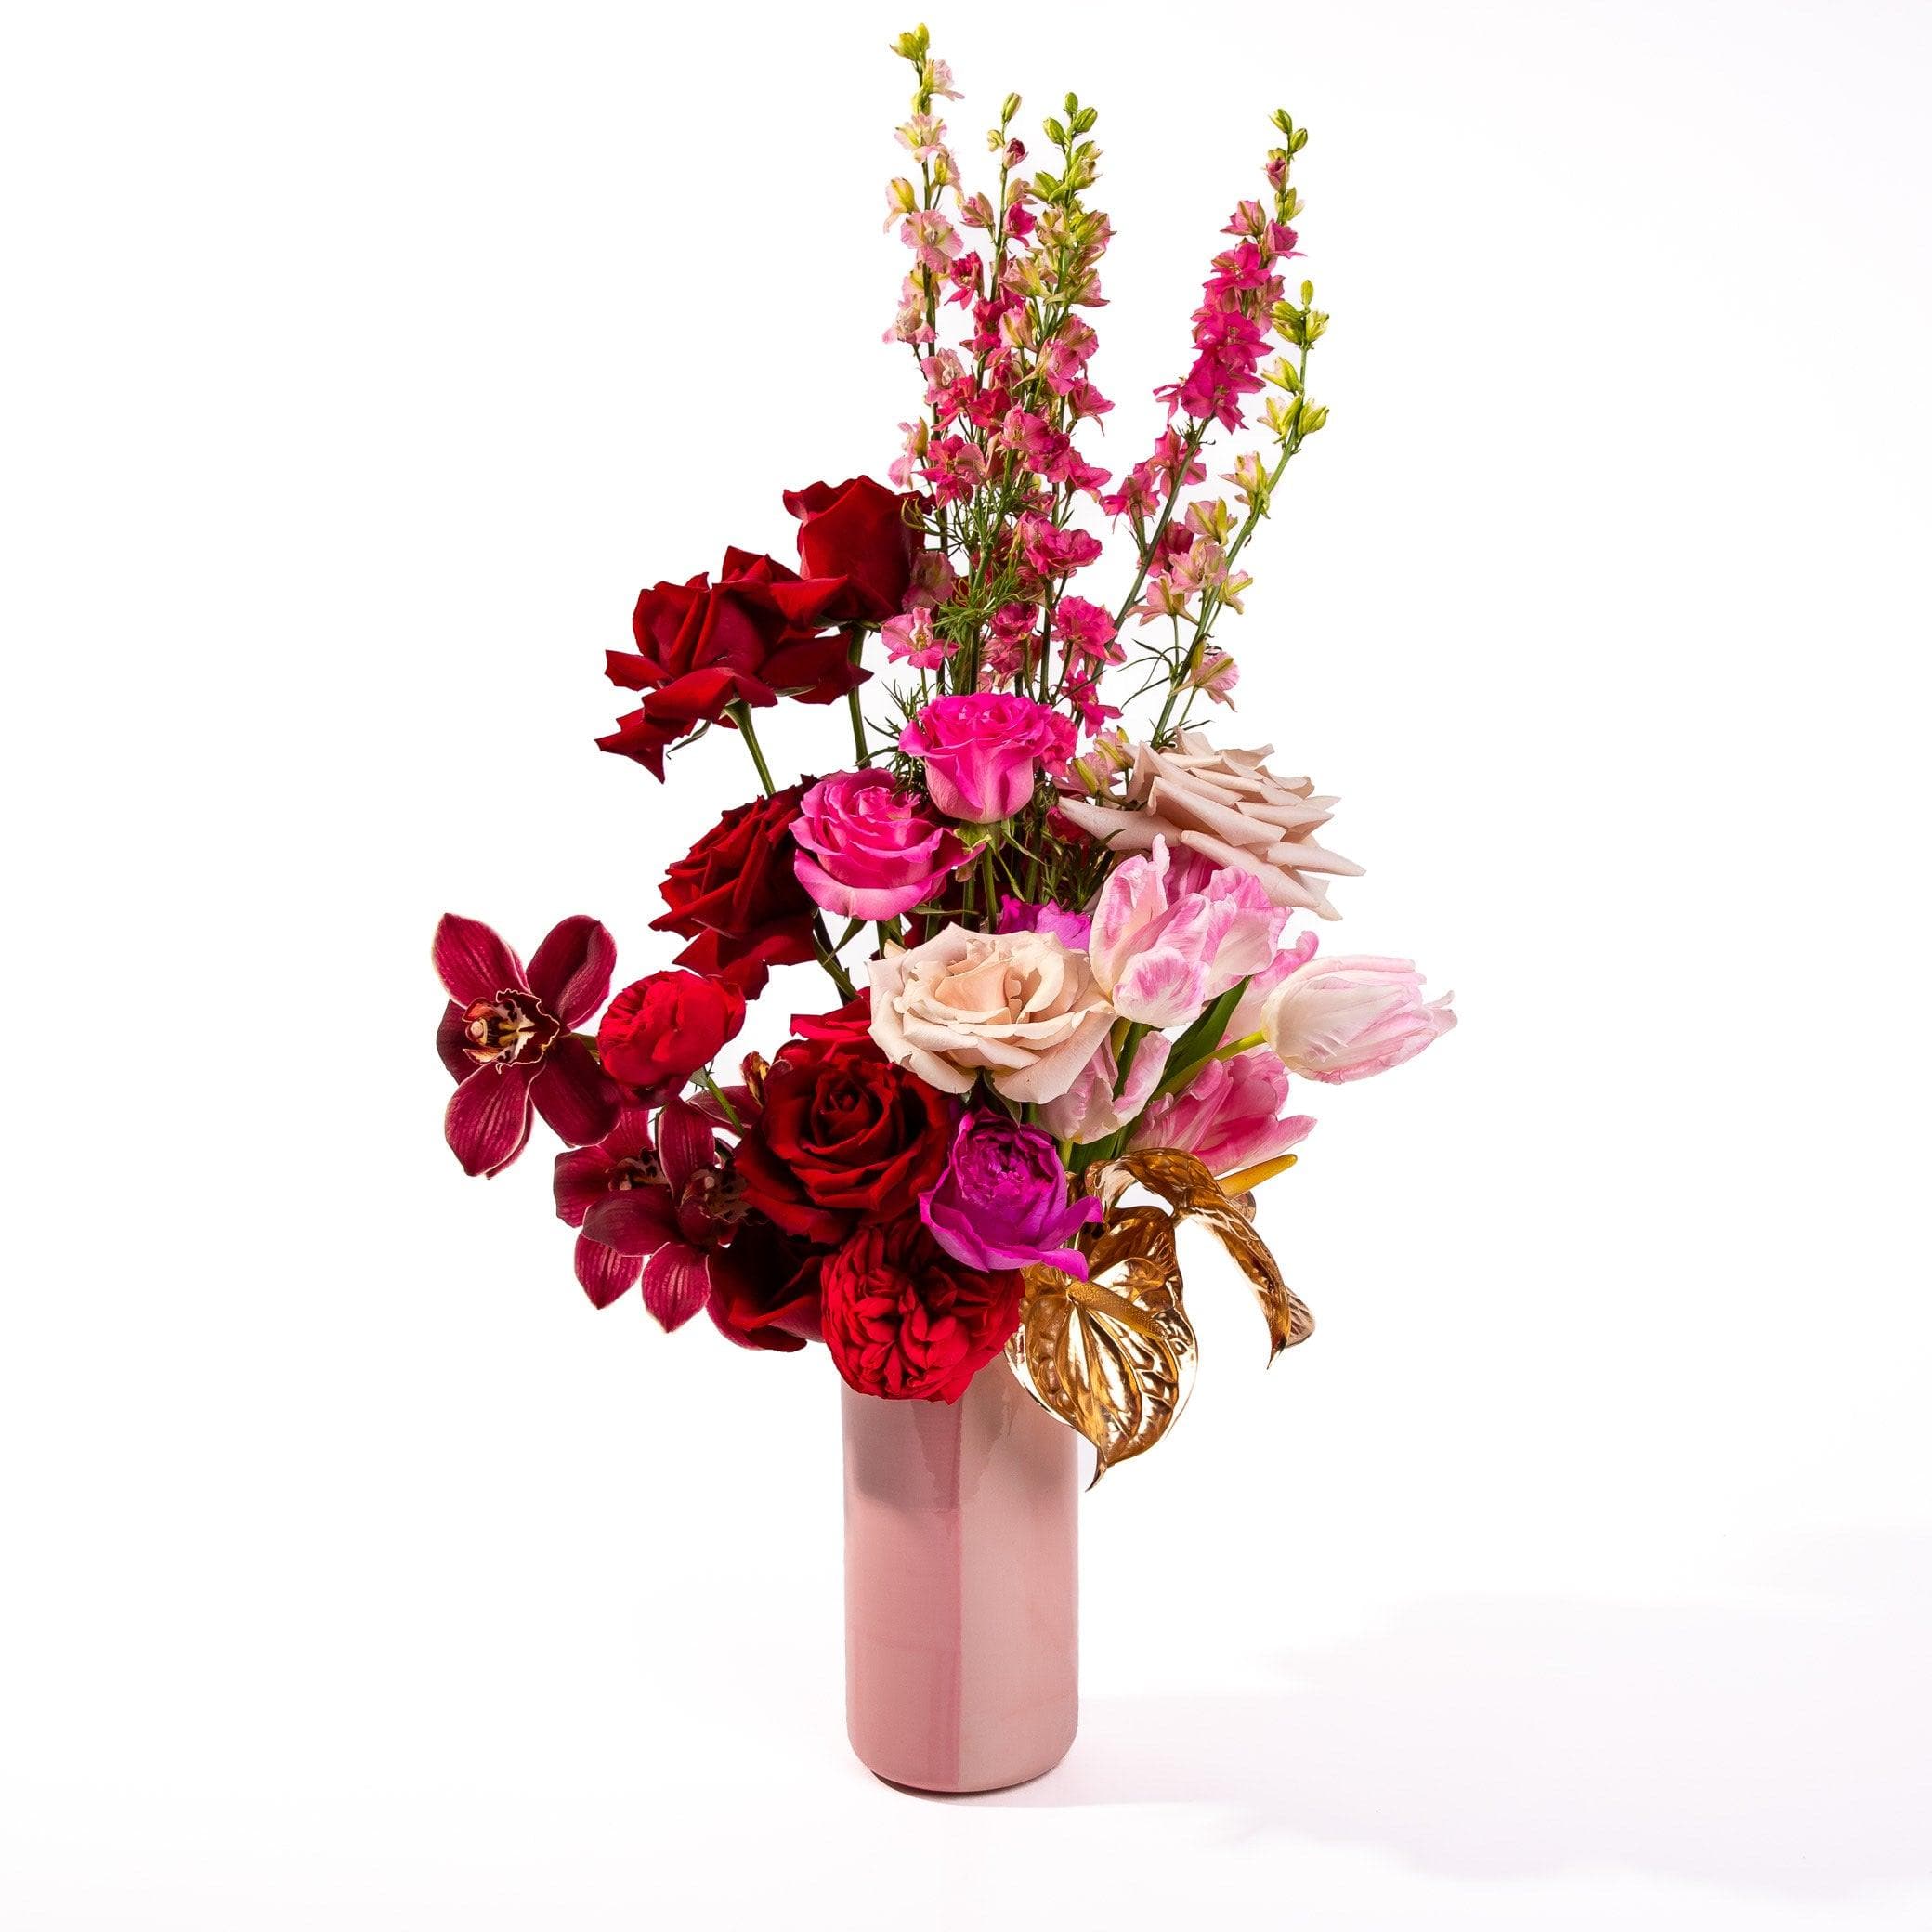 Shop Lucious Love Designer Floral online from Green Fresh Florals + Plants